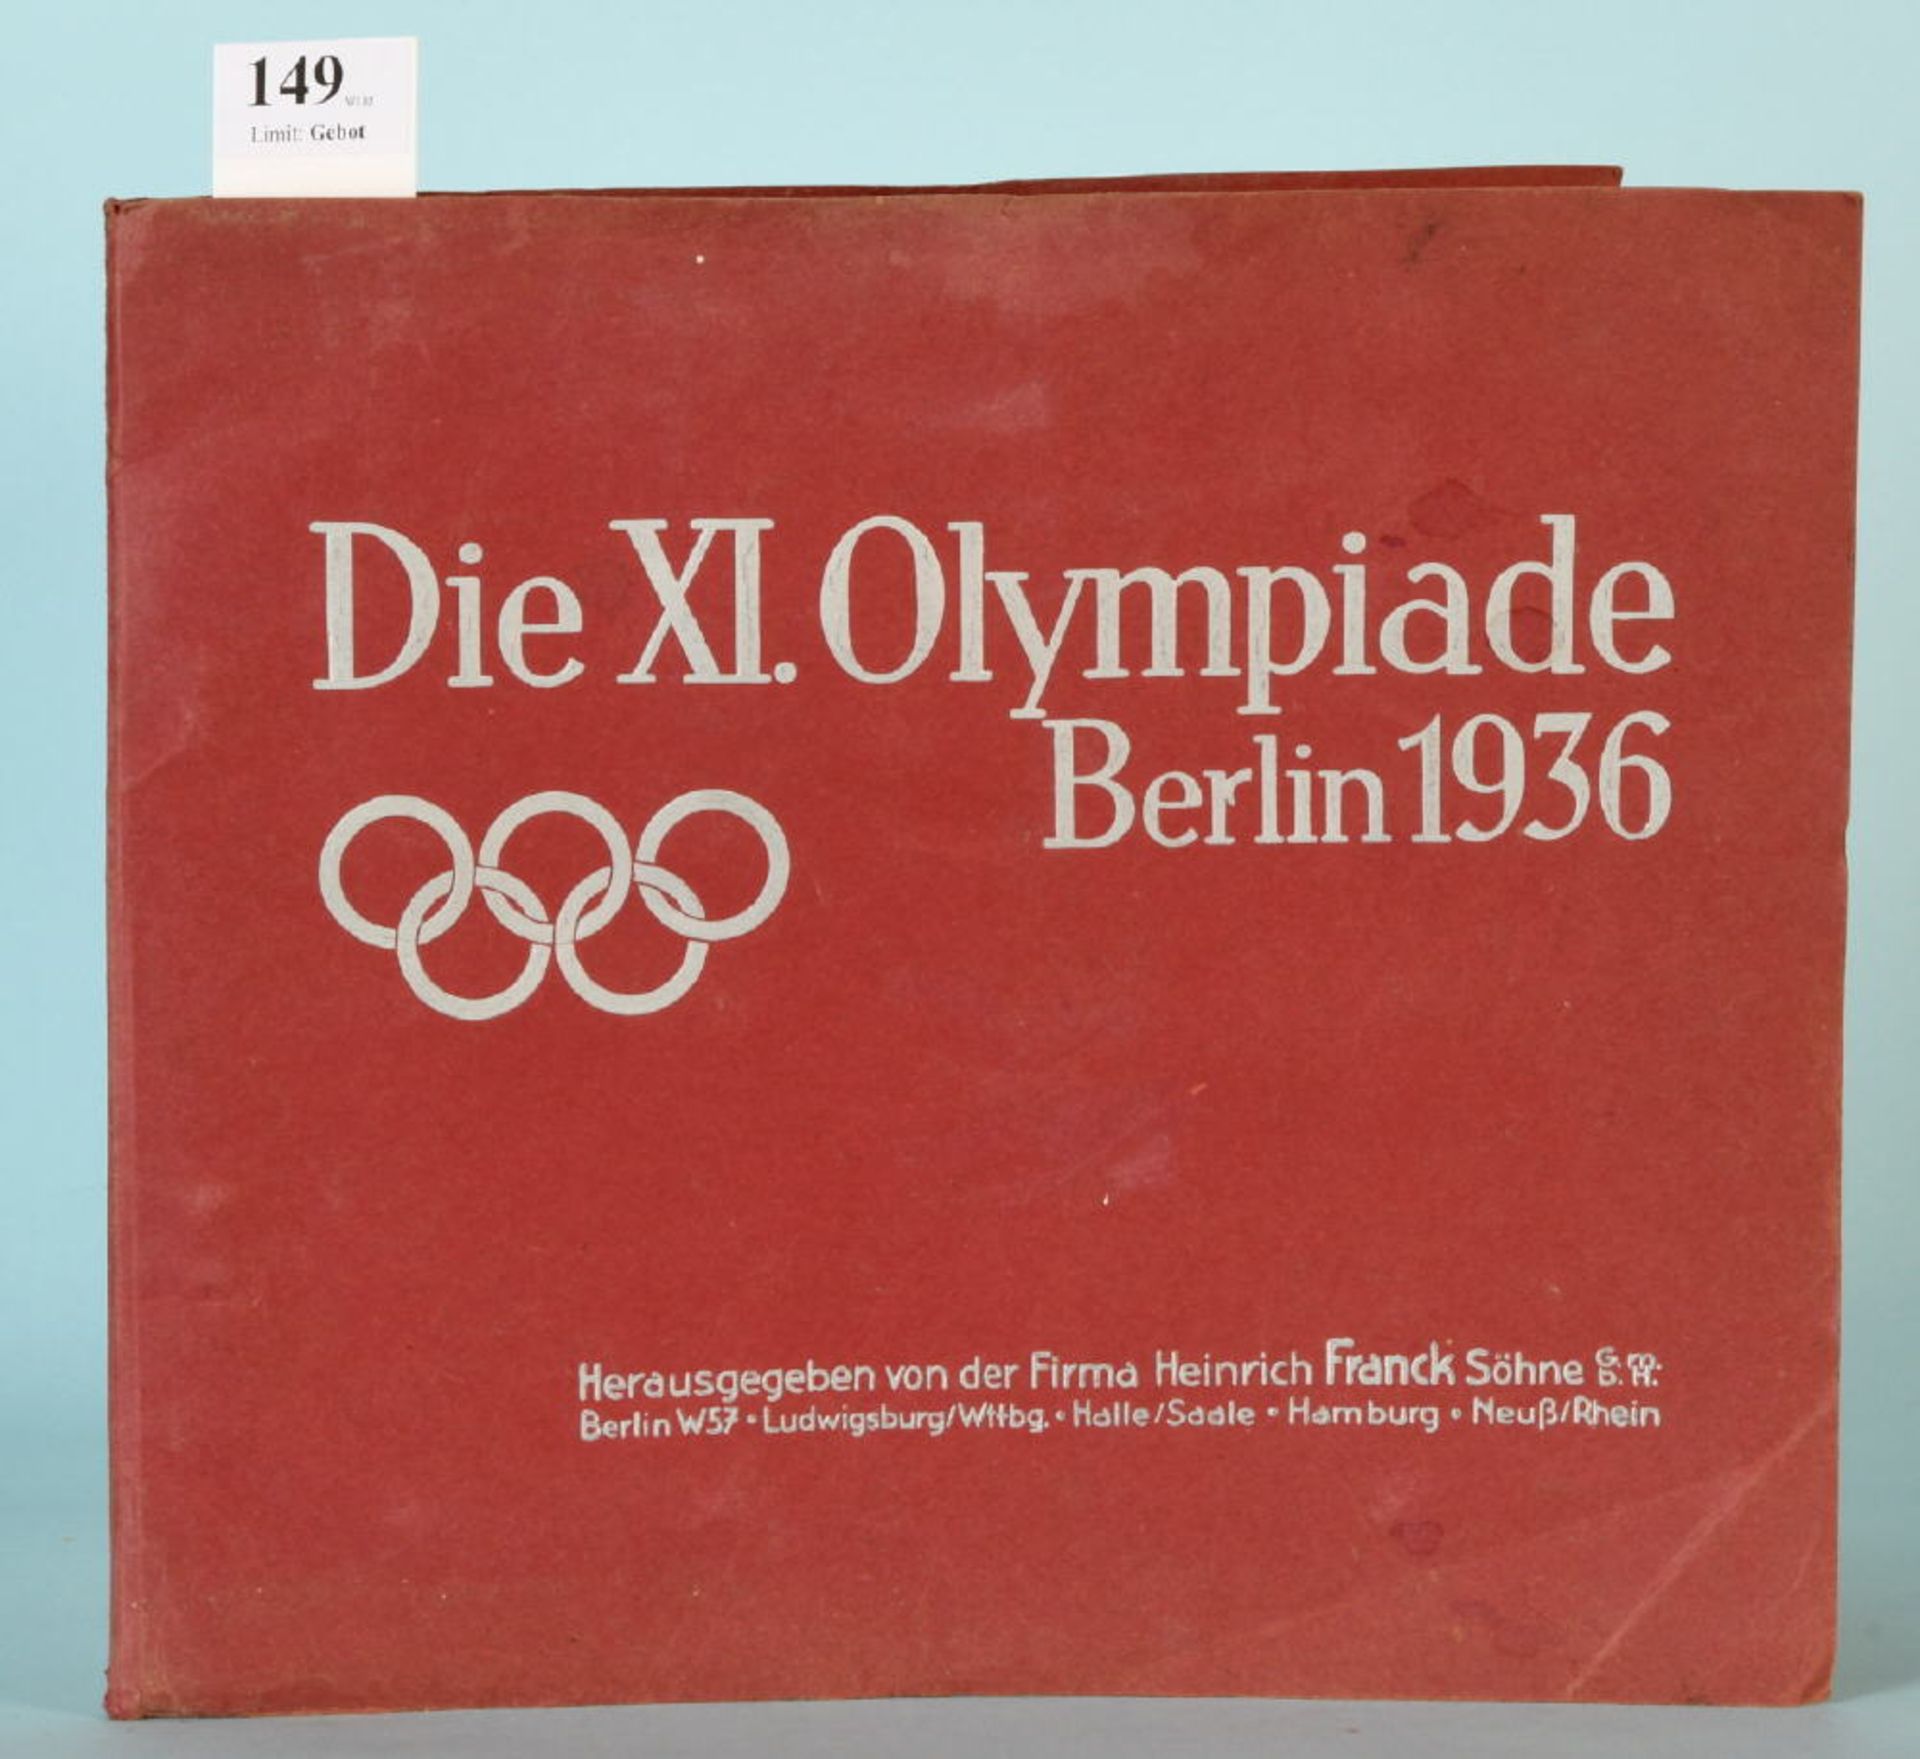 Sammelbilderalbum "Die XI. Olympiade, Berlin 1936"